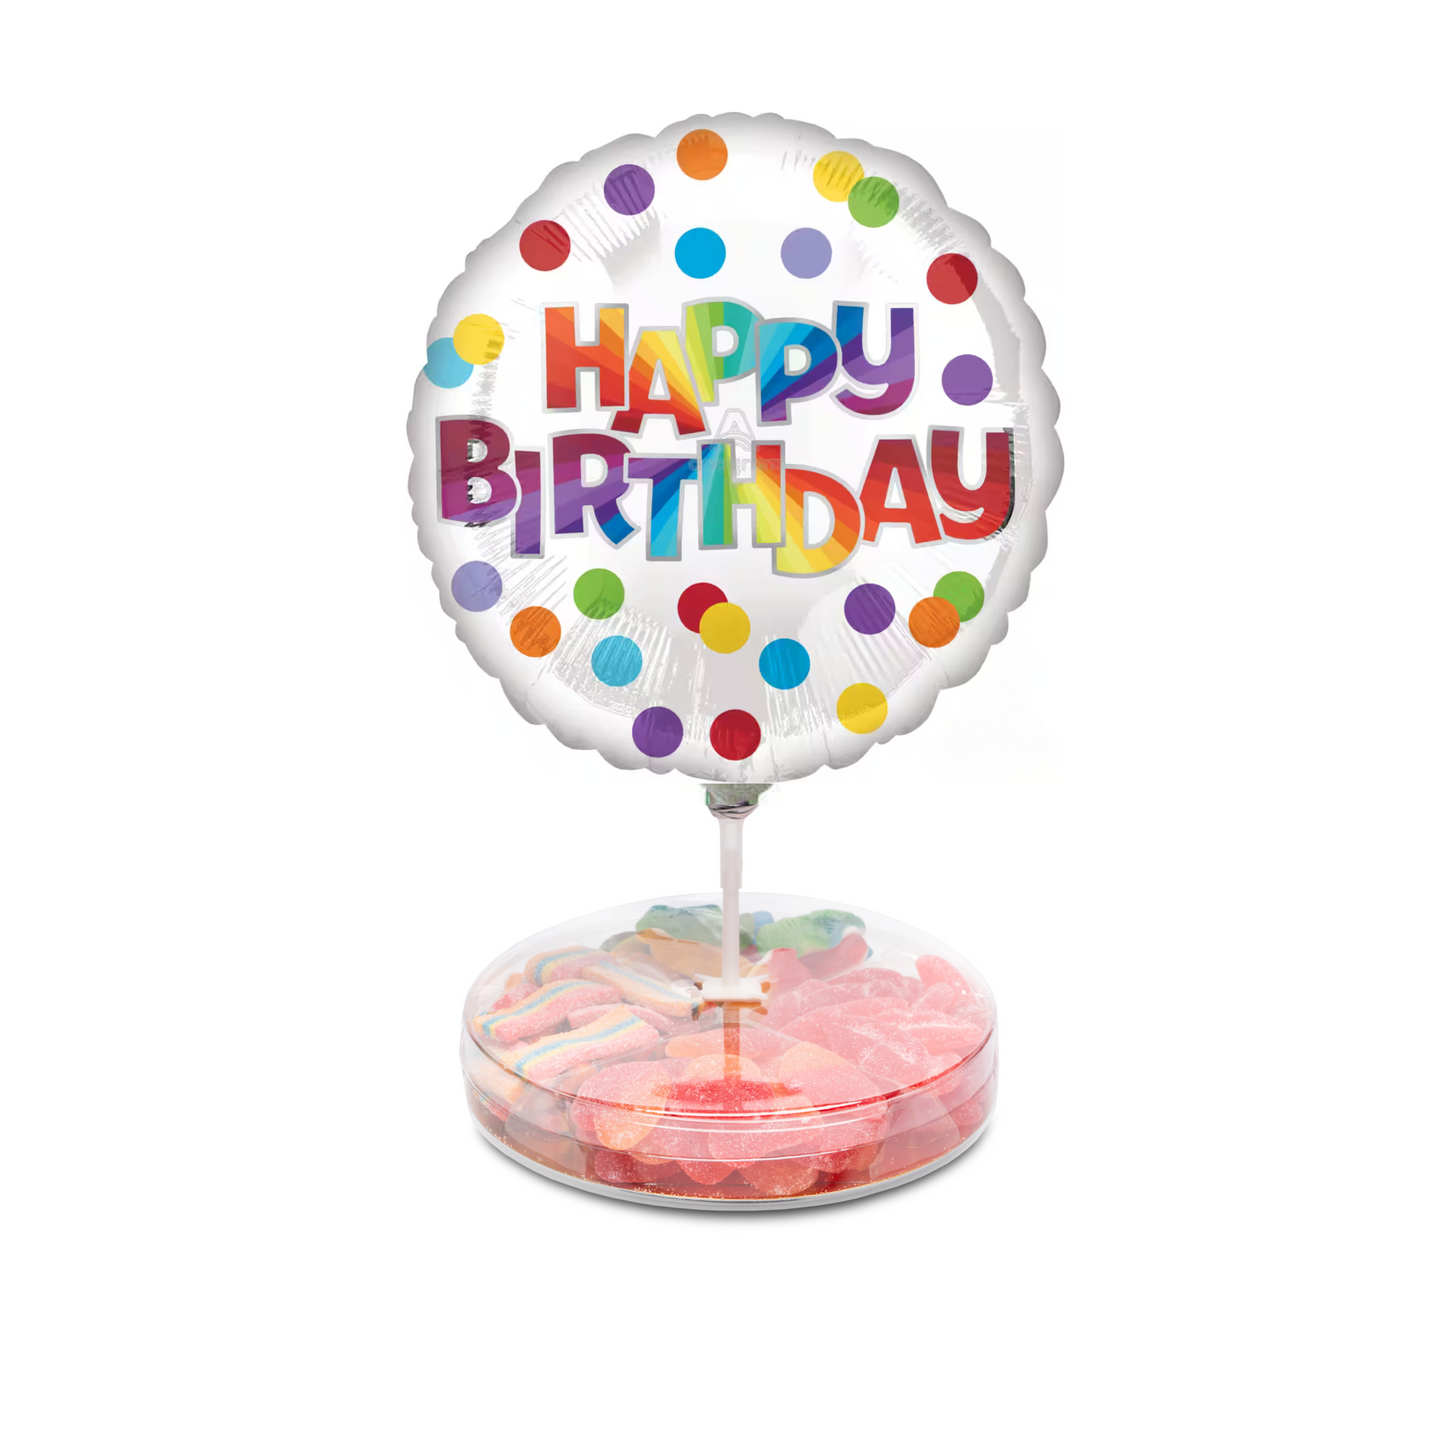 Small Platter with Happy Birthday Balloon